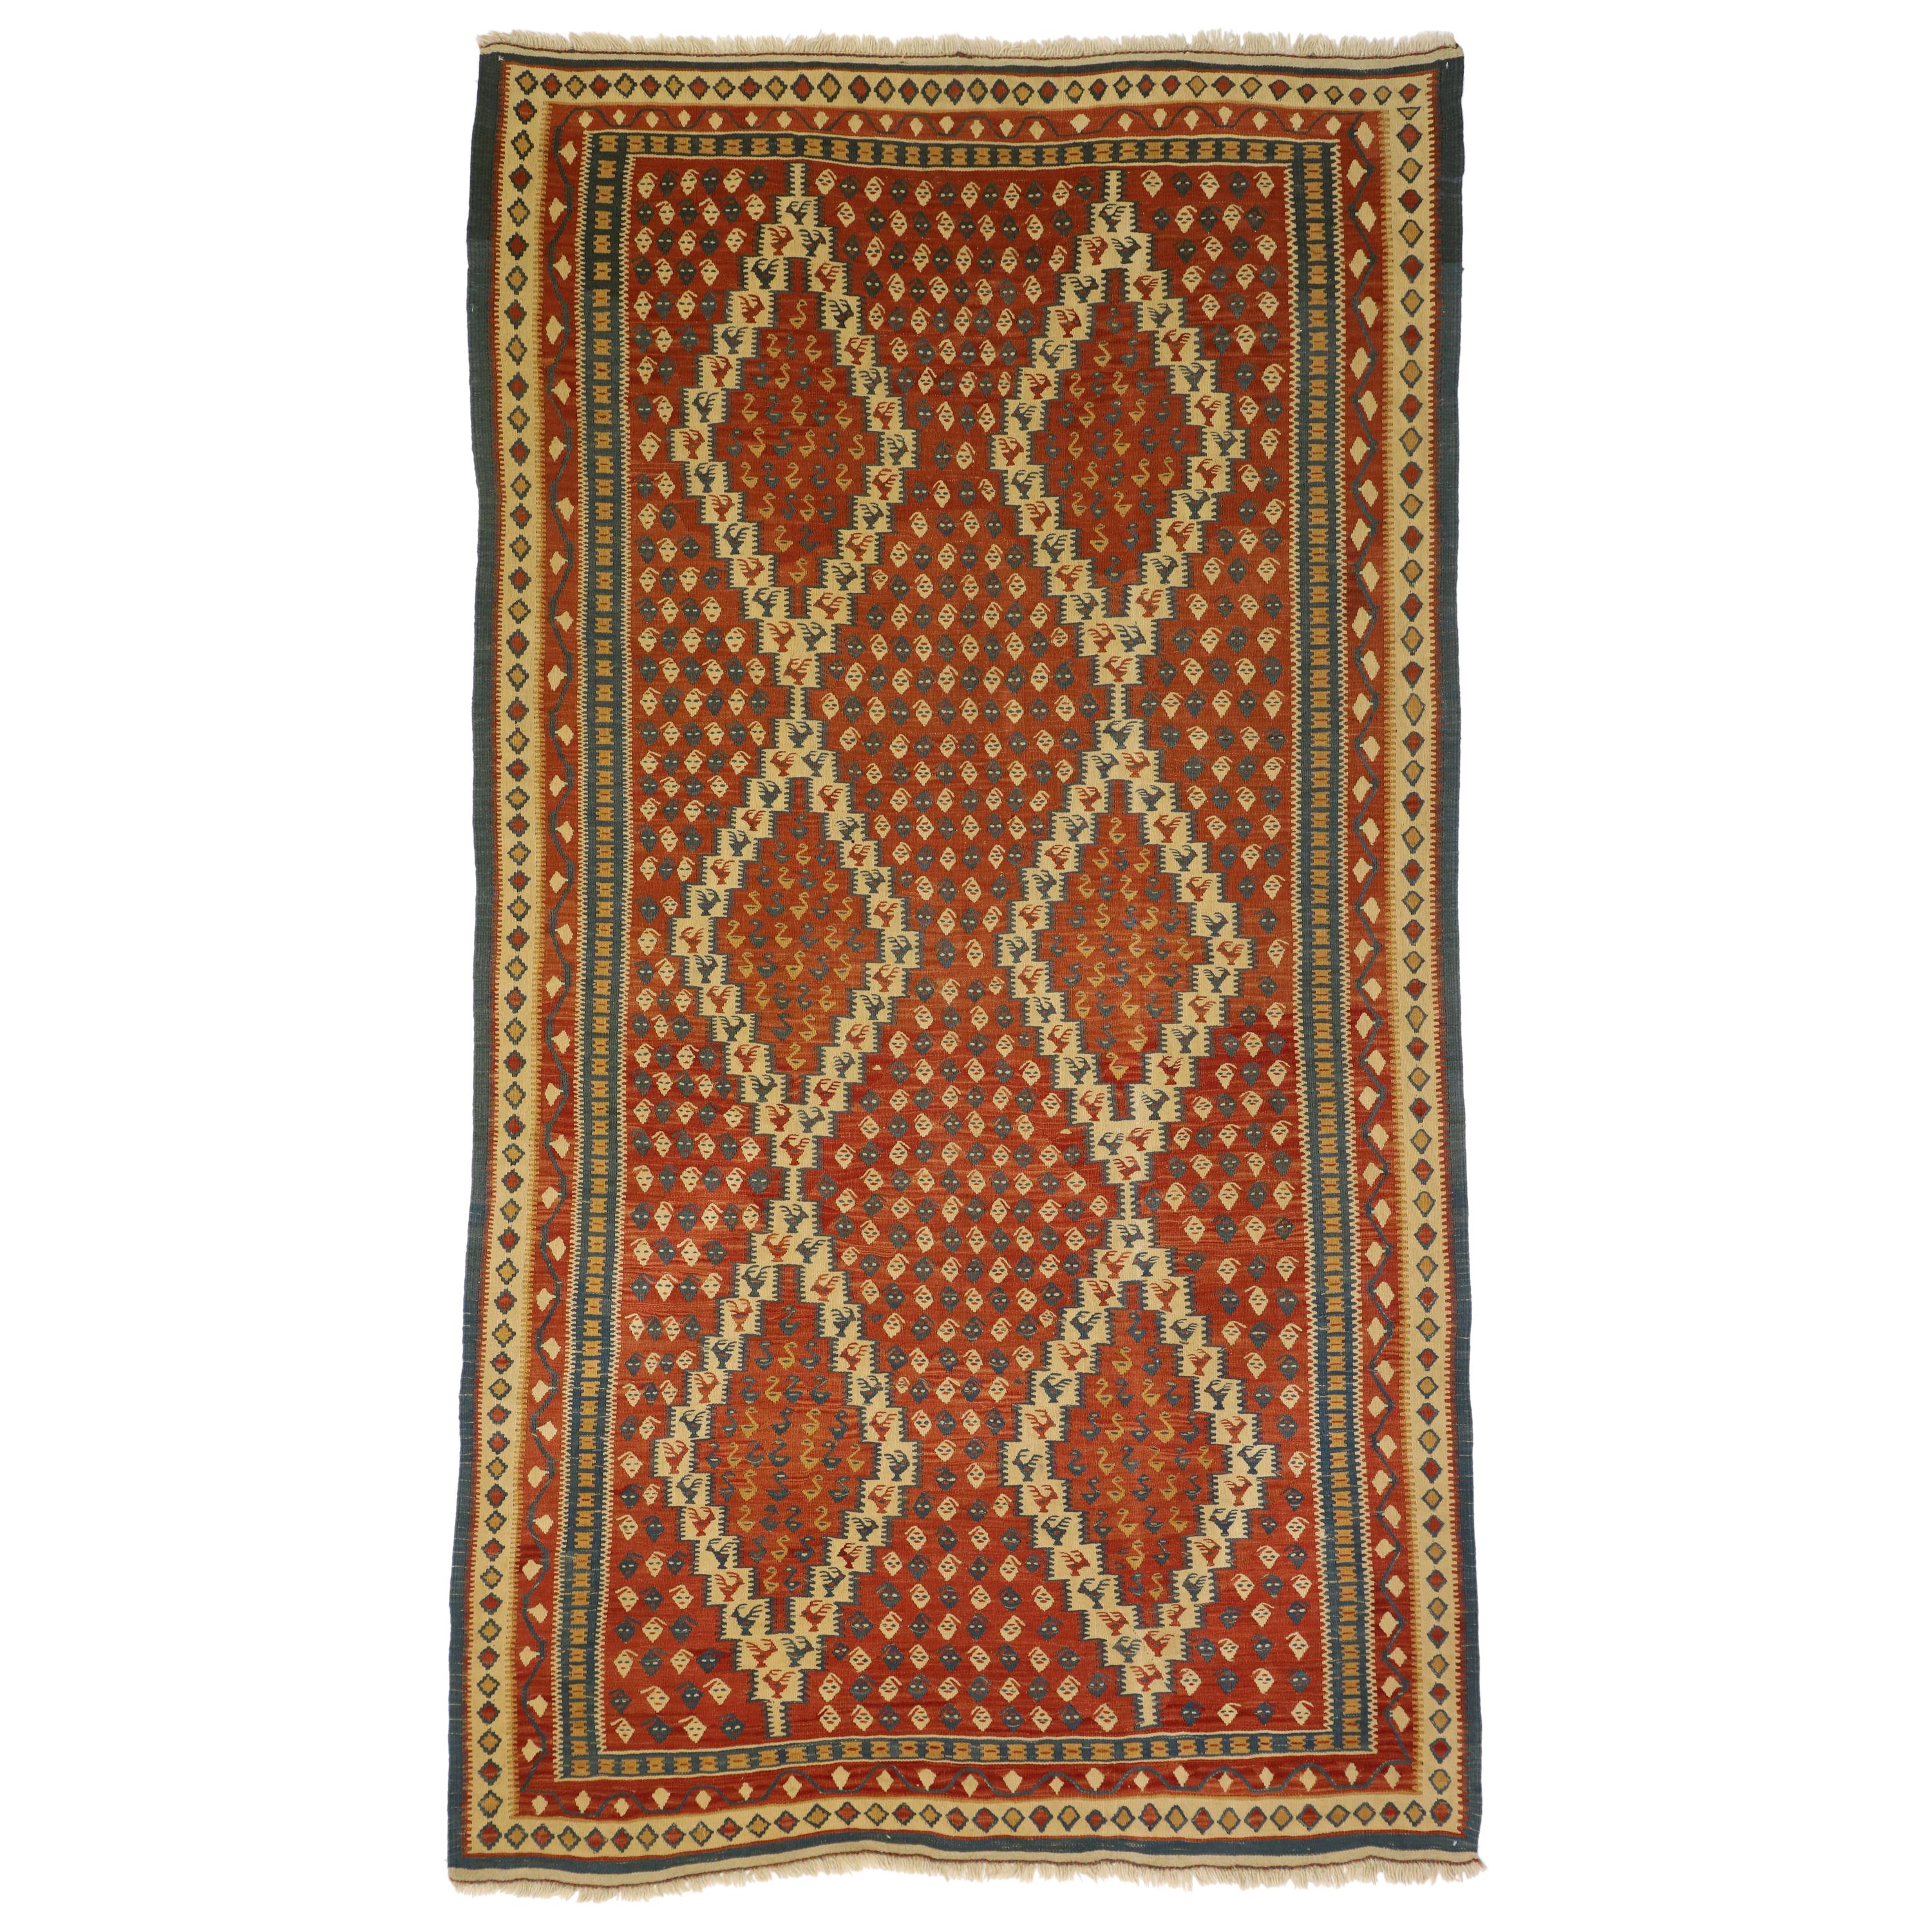 Vintage Persian Kilim Rug with Nomadic Tribal Style